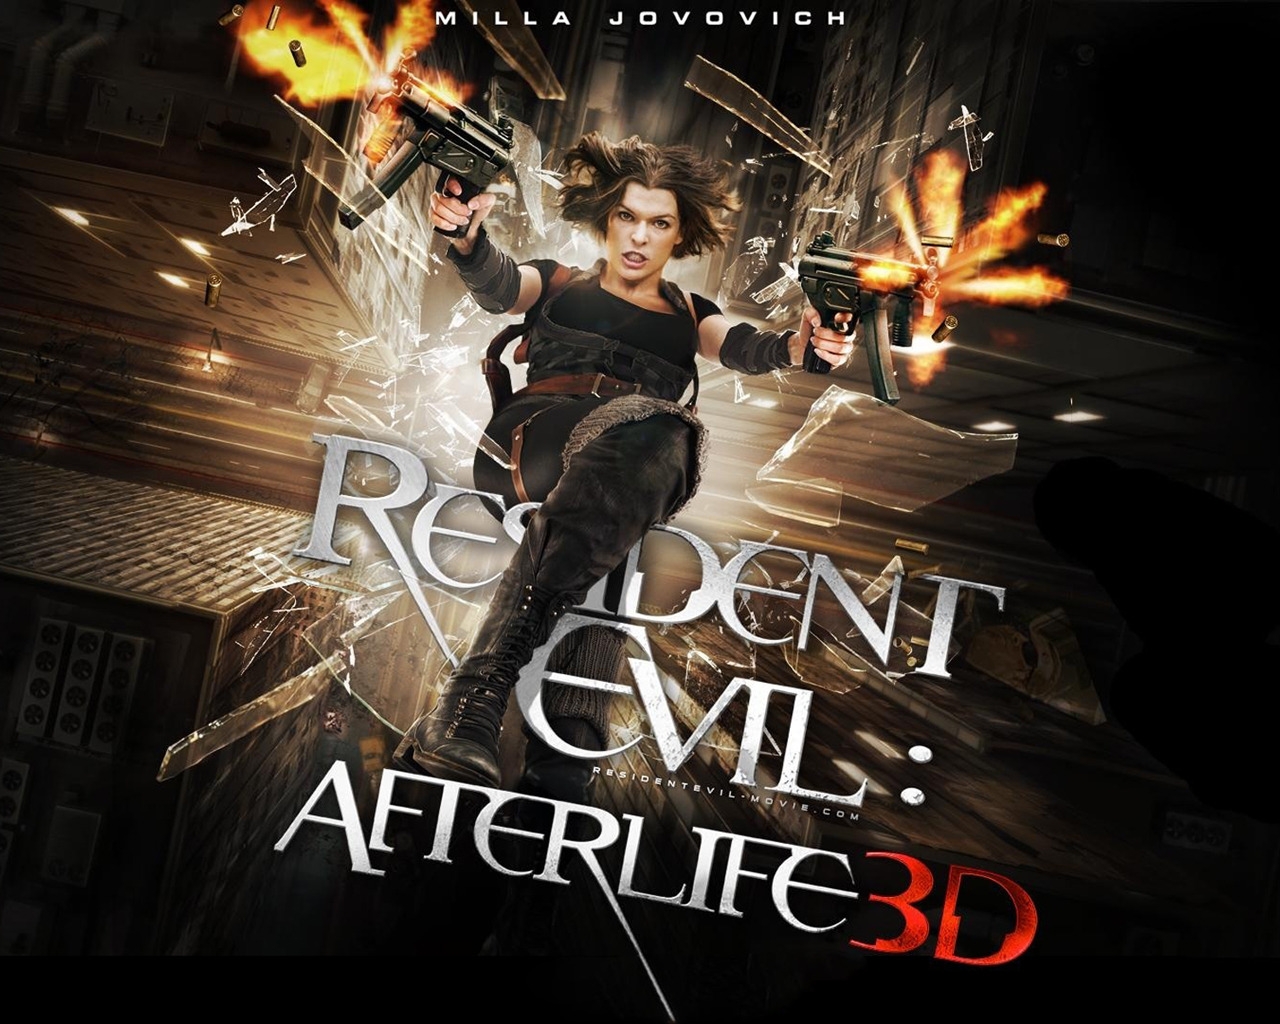 Resident Evil Afterlife 3D Poster for 1280 x 1024 resolution